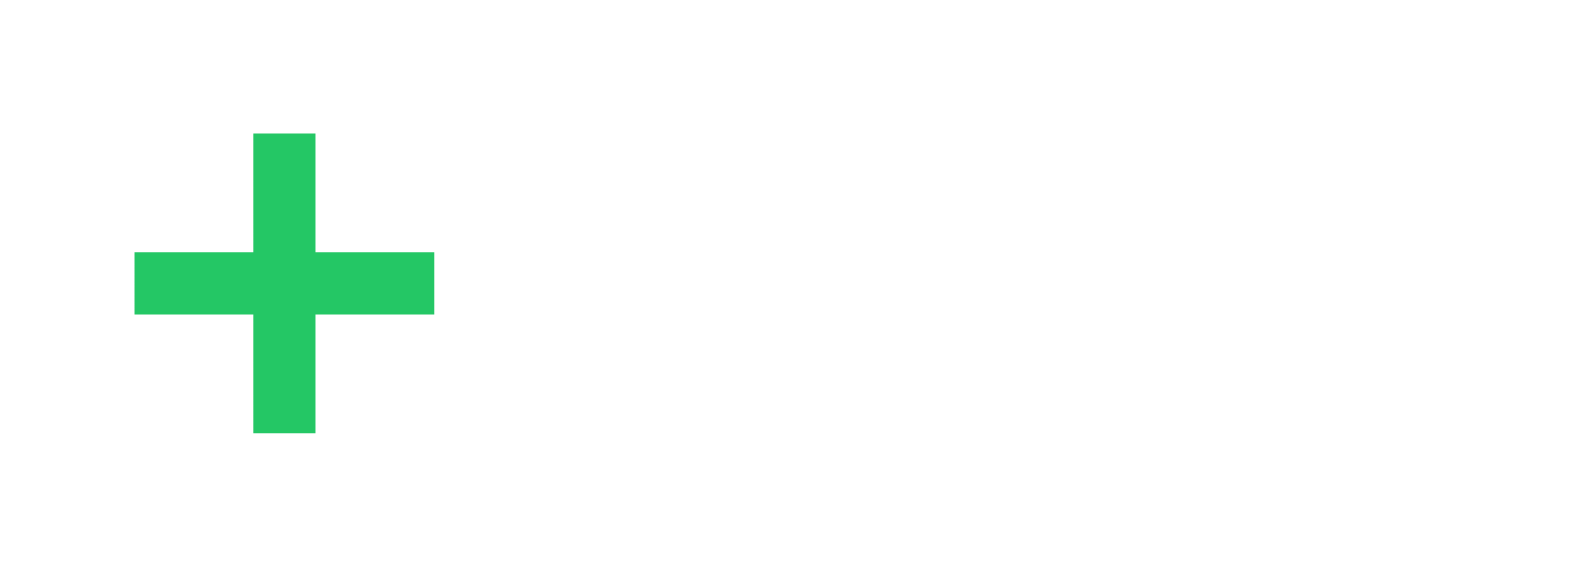 SES AI logo large for dark backgrounds (transparent PNG)